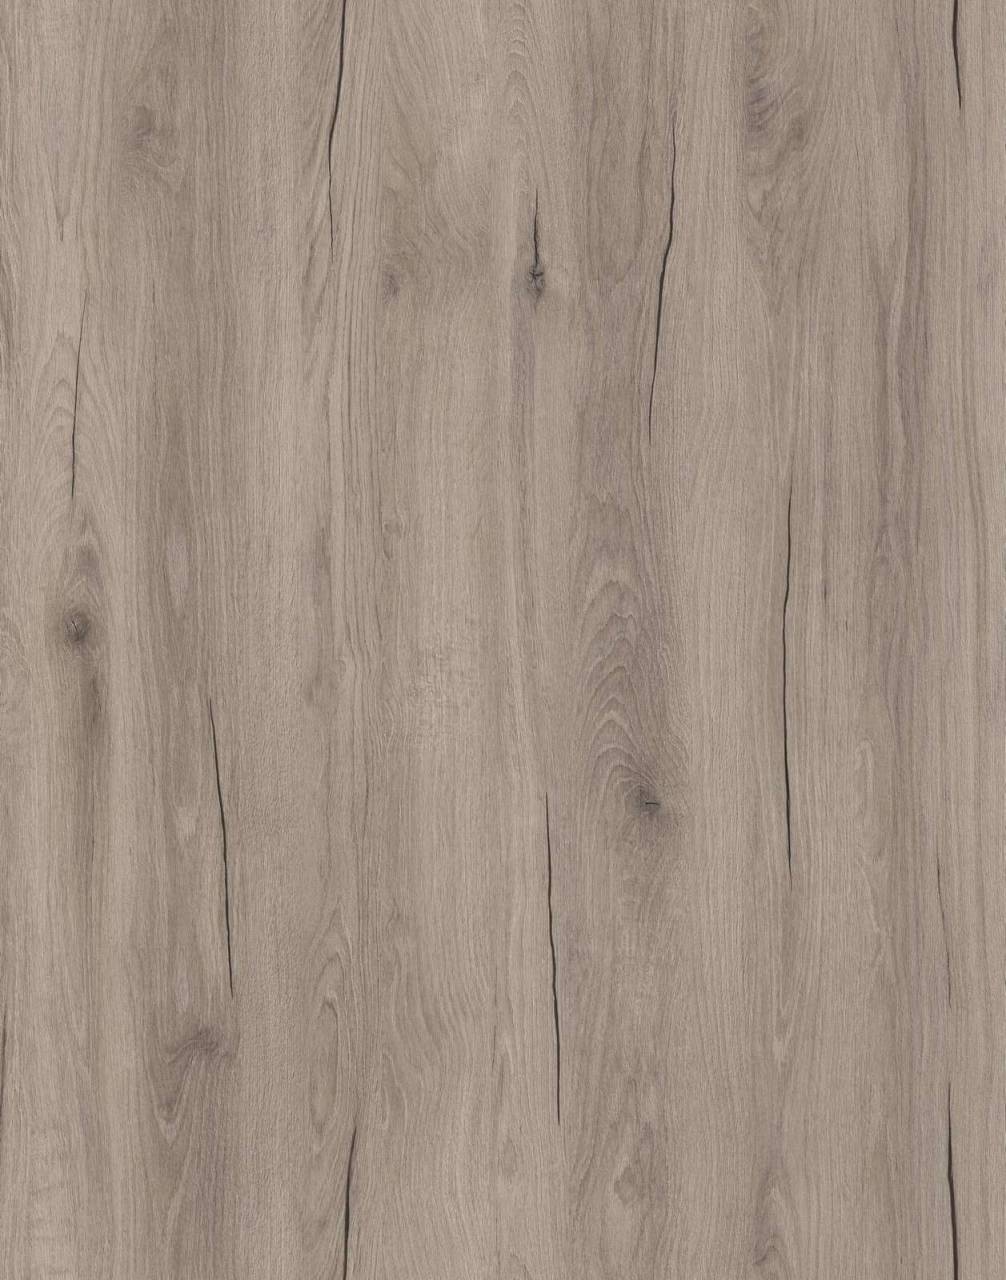 Nahaufnahme des Musters K528 Cashmere Hudson Oak, das die elegante Farbe Cashmere Hudson Oak zeigt.